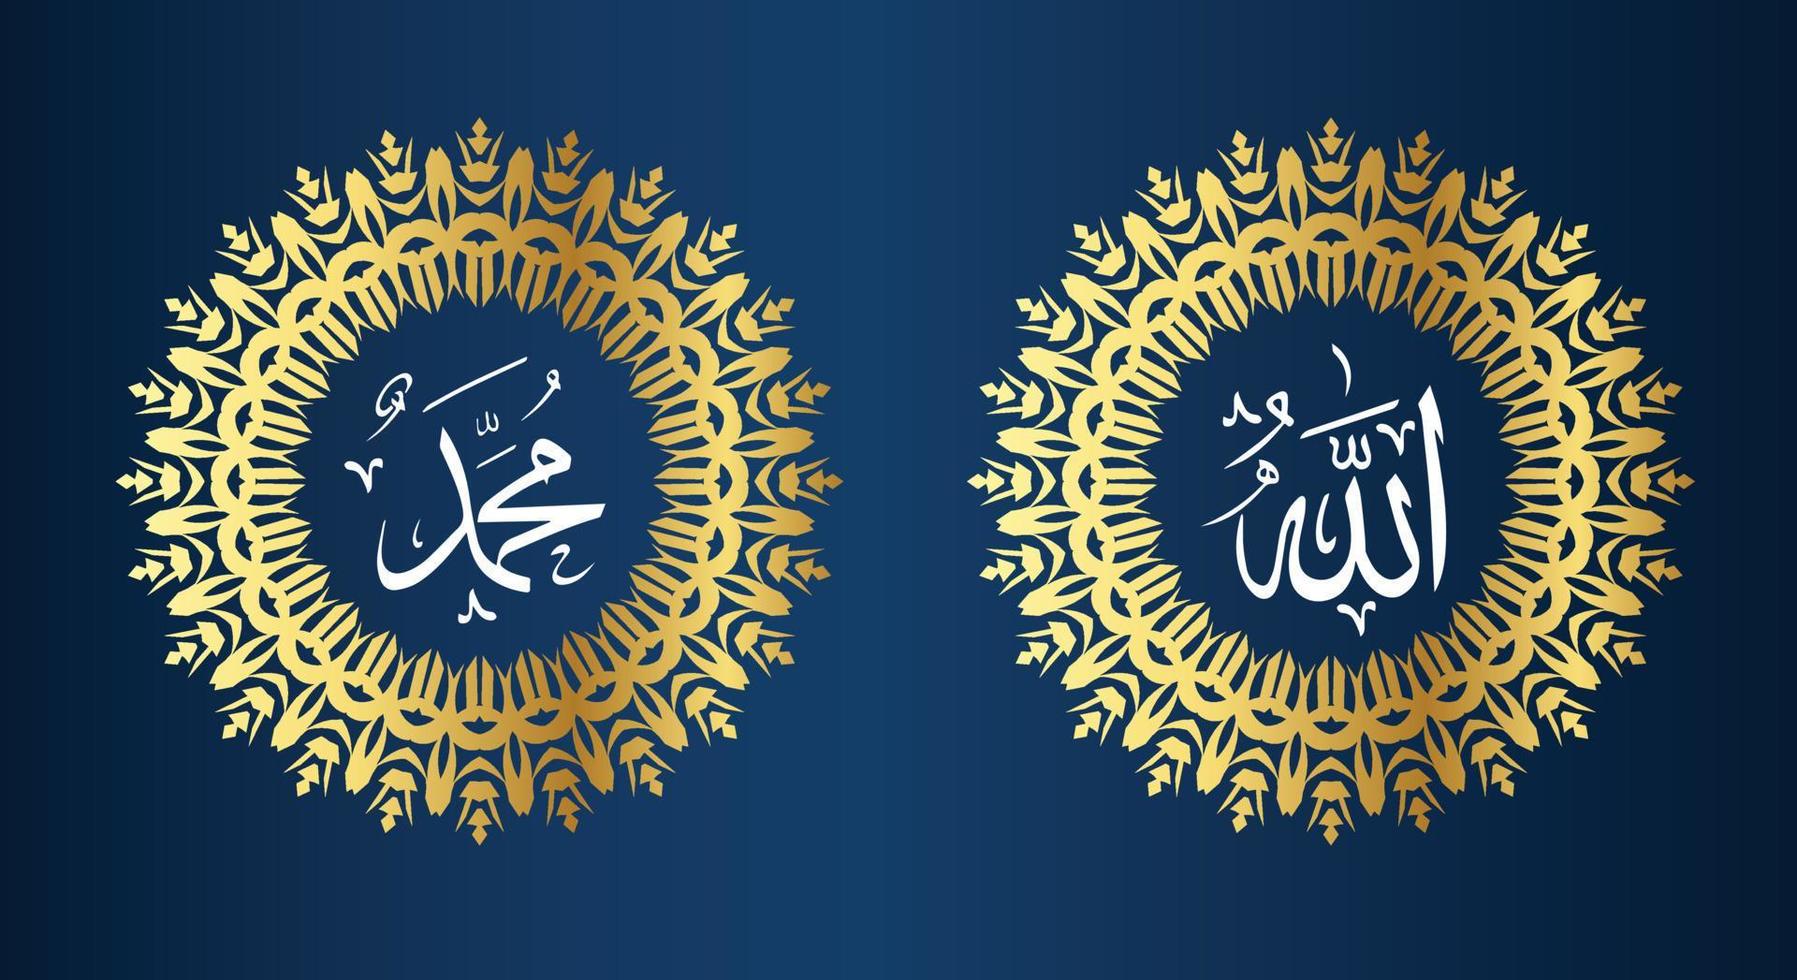 livre allah muhammad nome de allah muhammad, arte de caligrafia árabe islâmica de allah muhammad, com moldura tradicional e cor dourada vetor